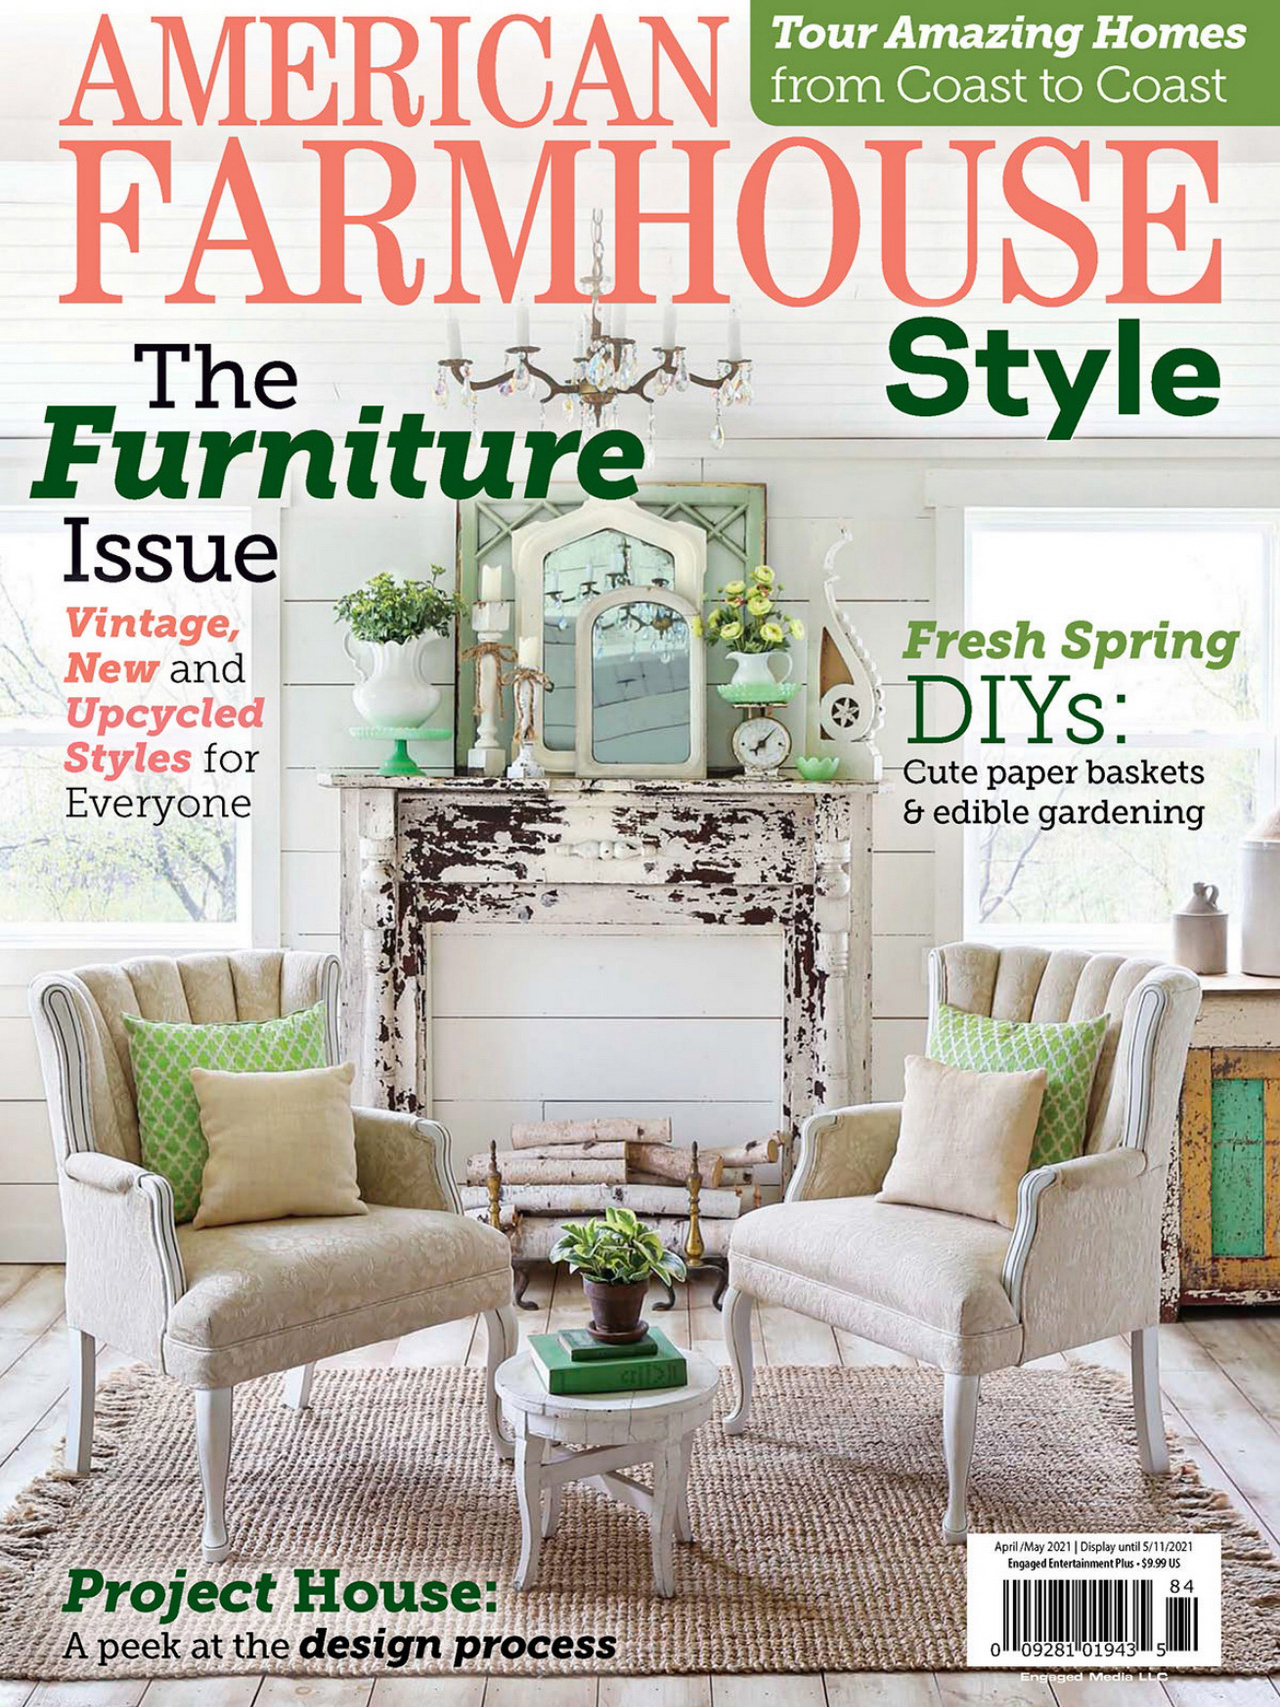 《American Farmhouse Style》美国版时尚室内设计杂志2021年04-05月号